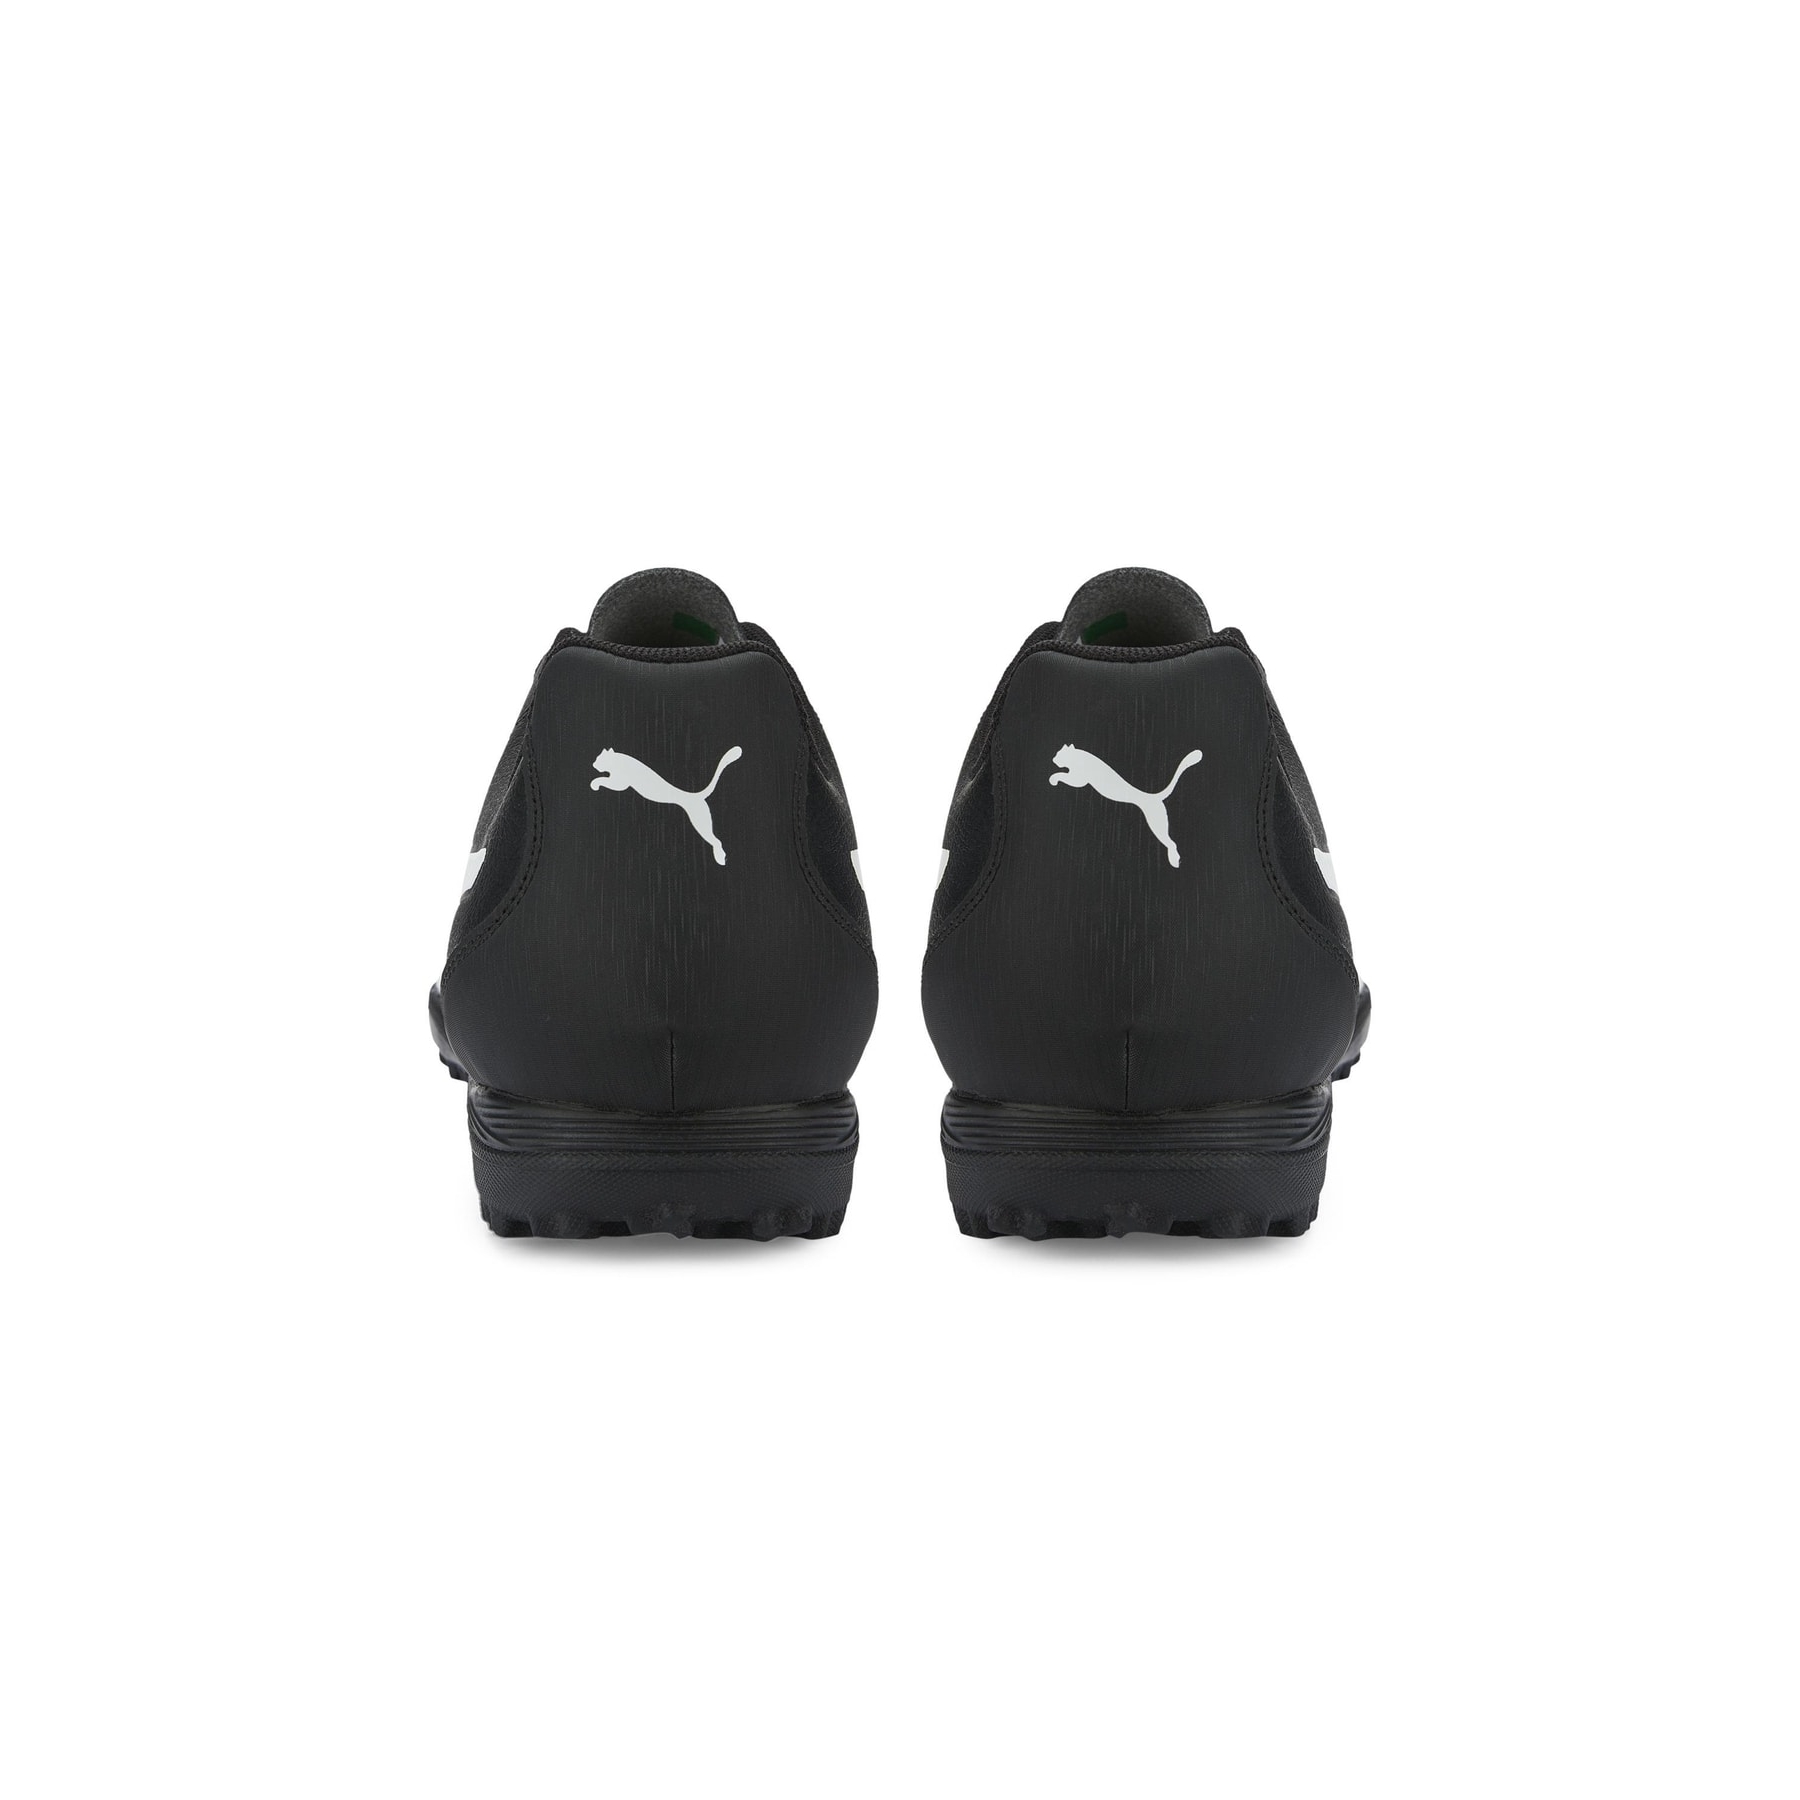 Puma Monarch II Siyah Spor Ayakkabı (106560-01)